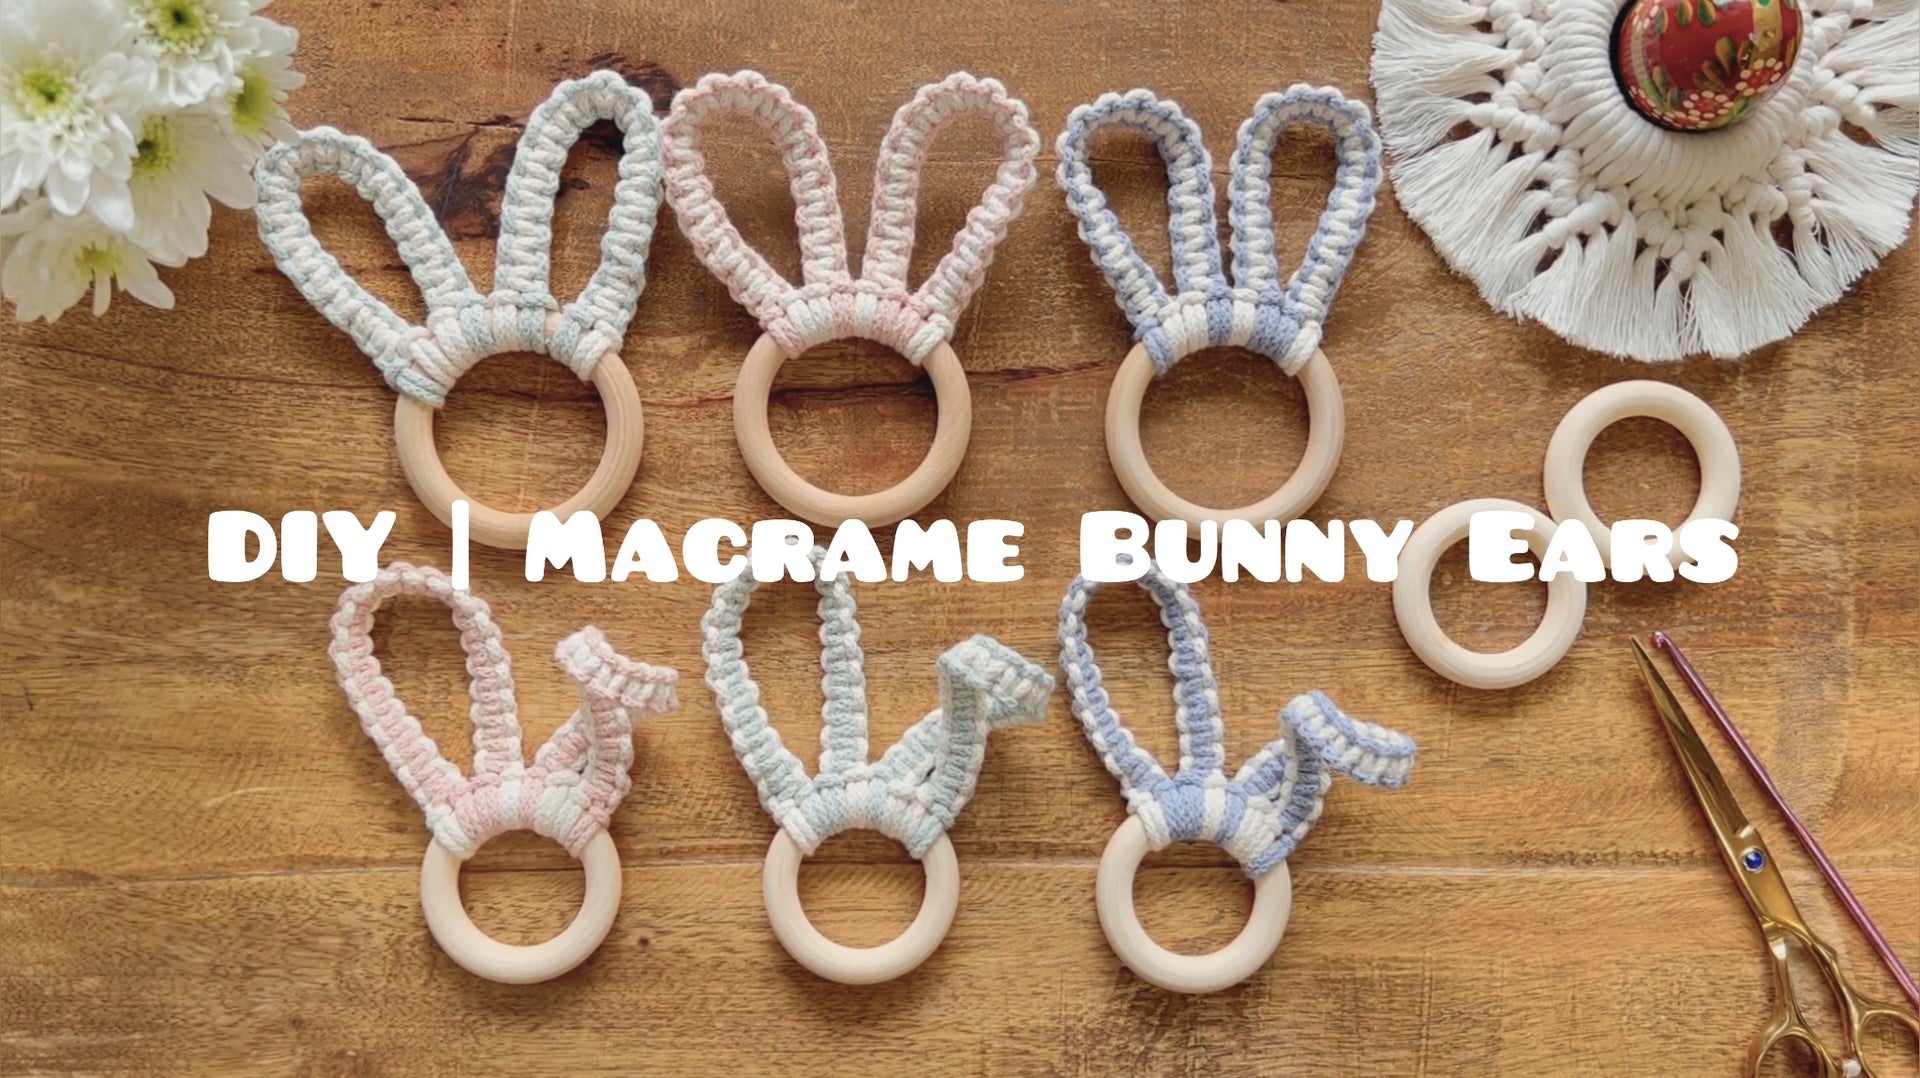 Load video: Macrame Bunny Ears Tutorial